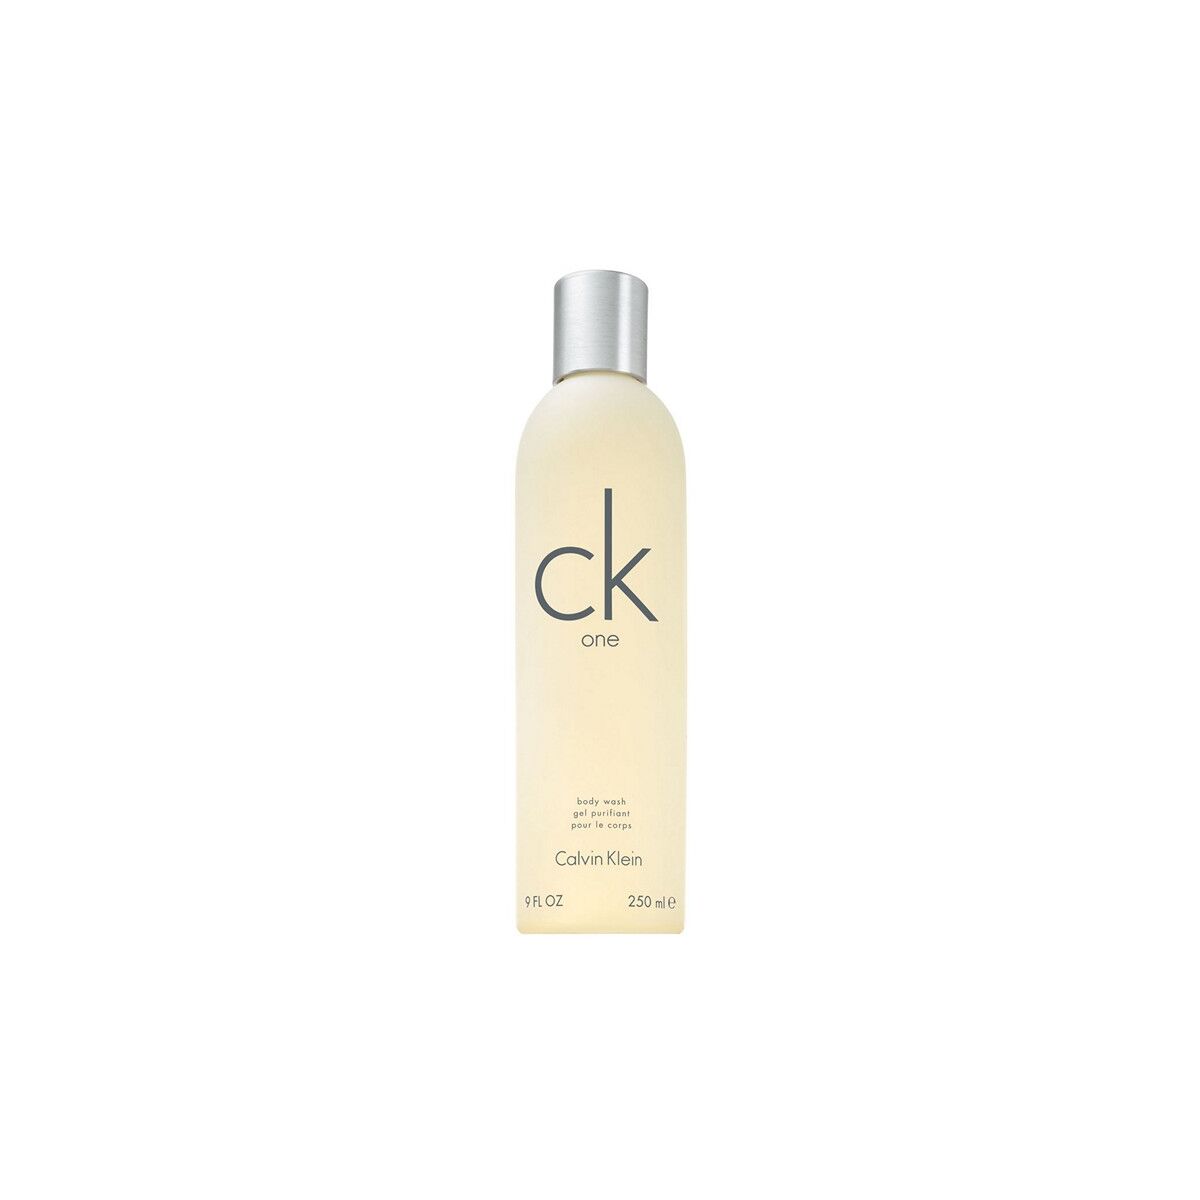 CK One Purifying Body Wash 250ml Calvin Klein | Thaler Shop